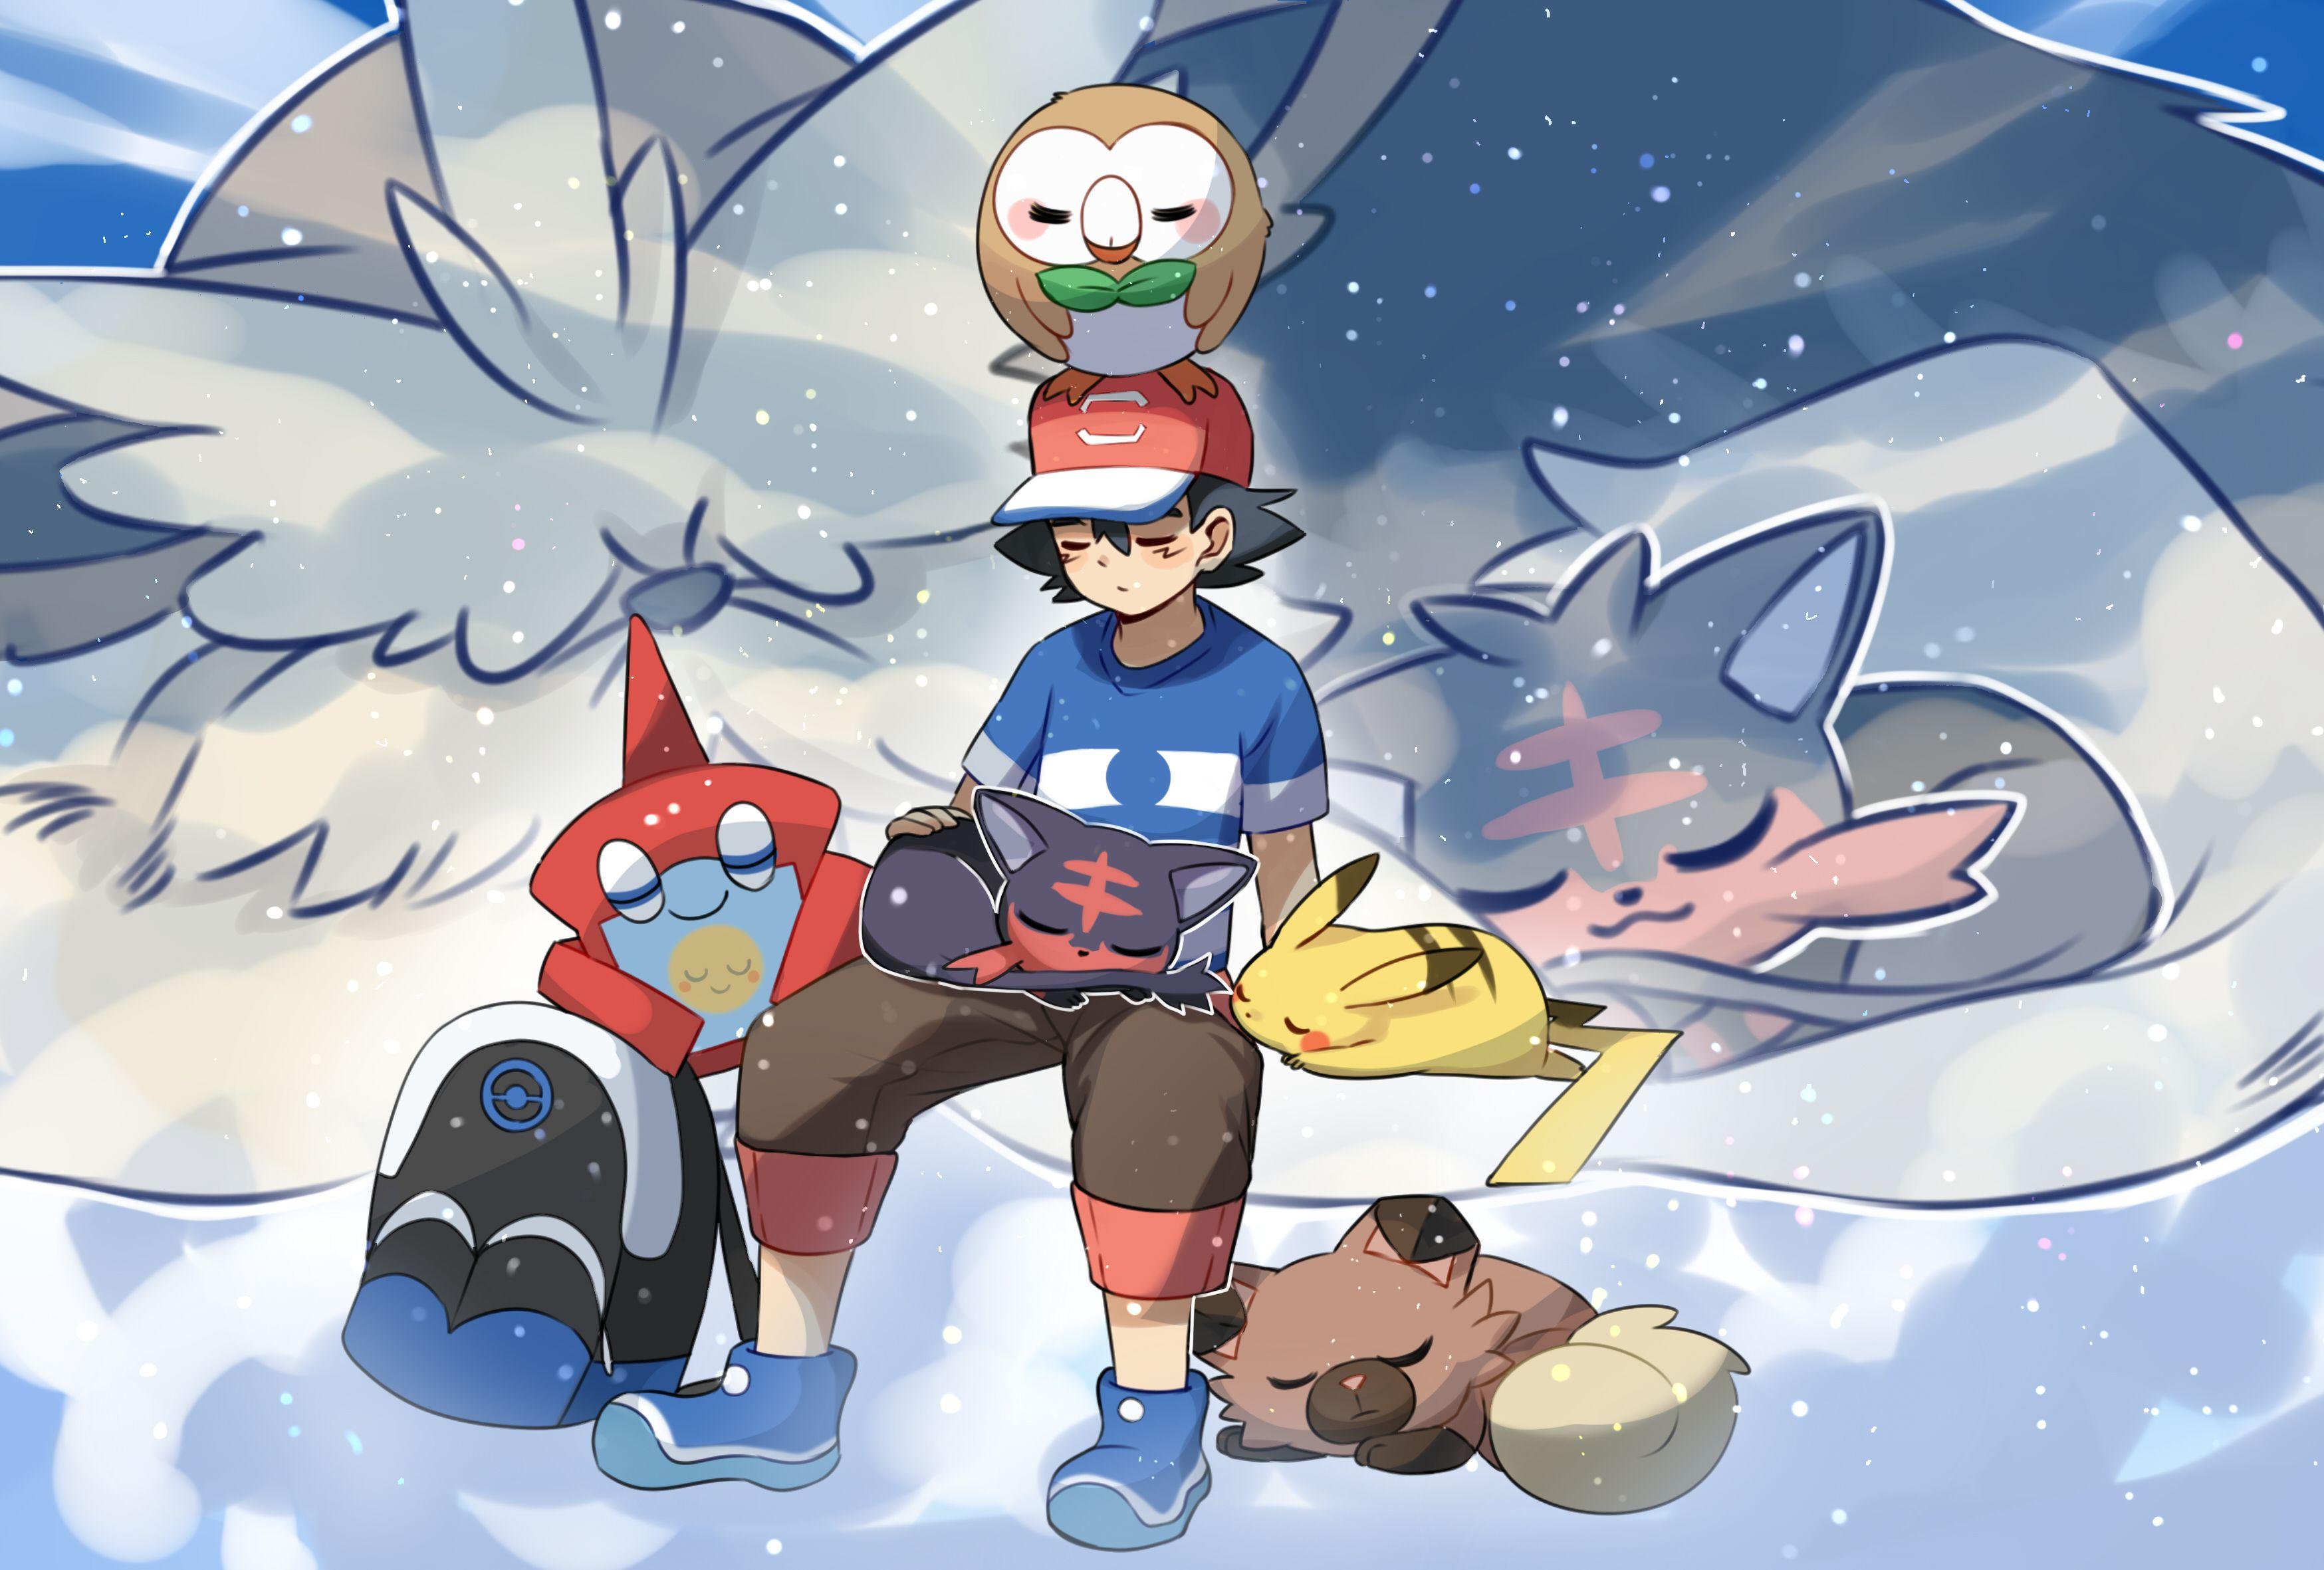 Rockruff (Pokémon) HD Wallpaper and Background Image